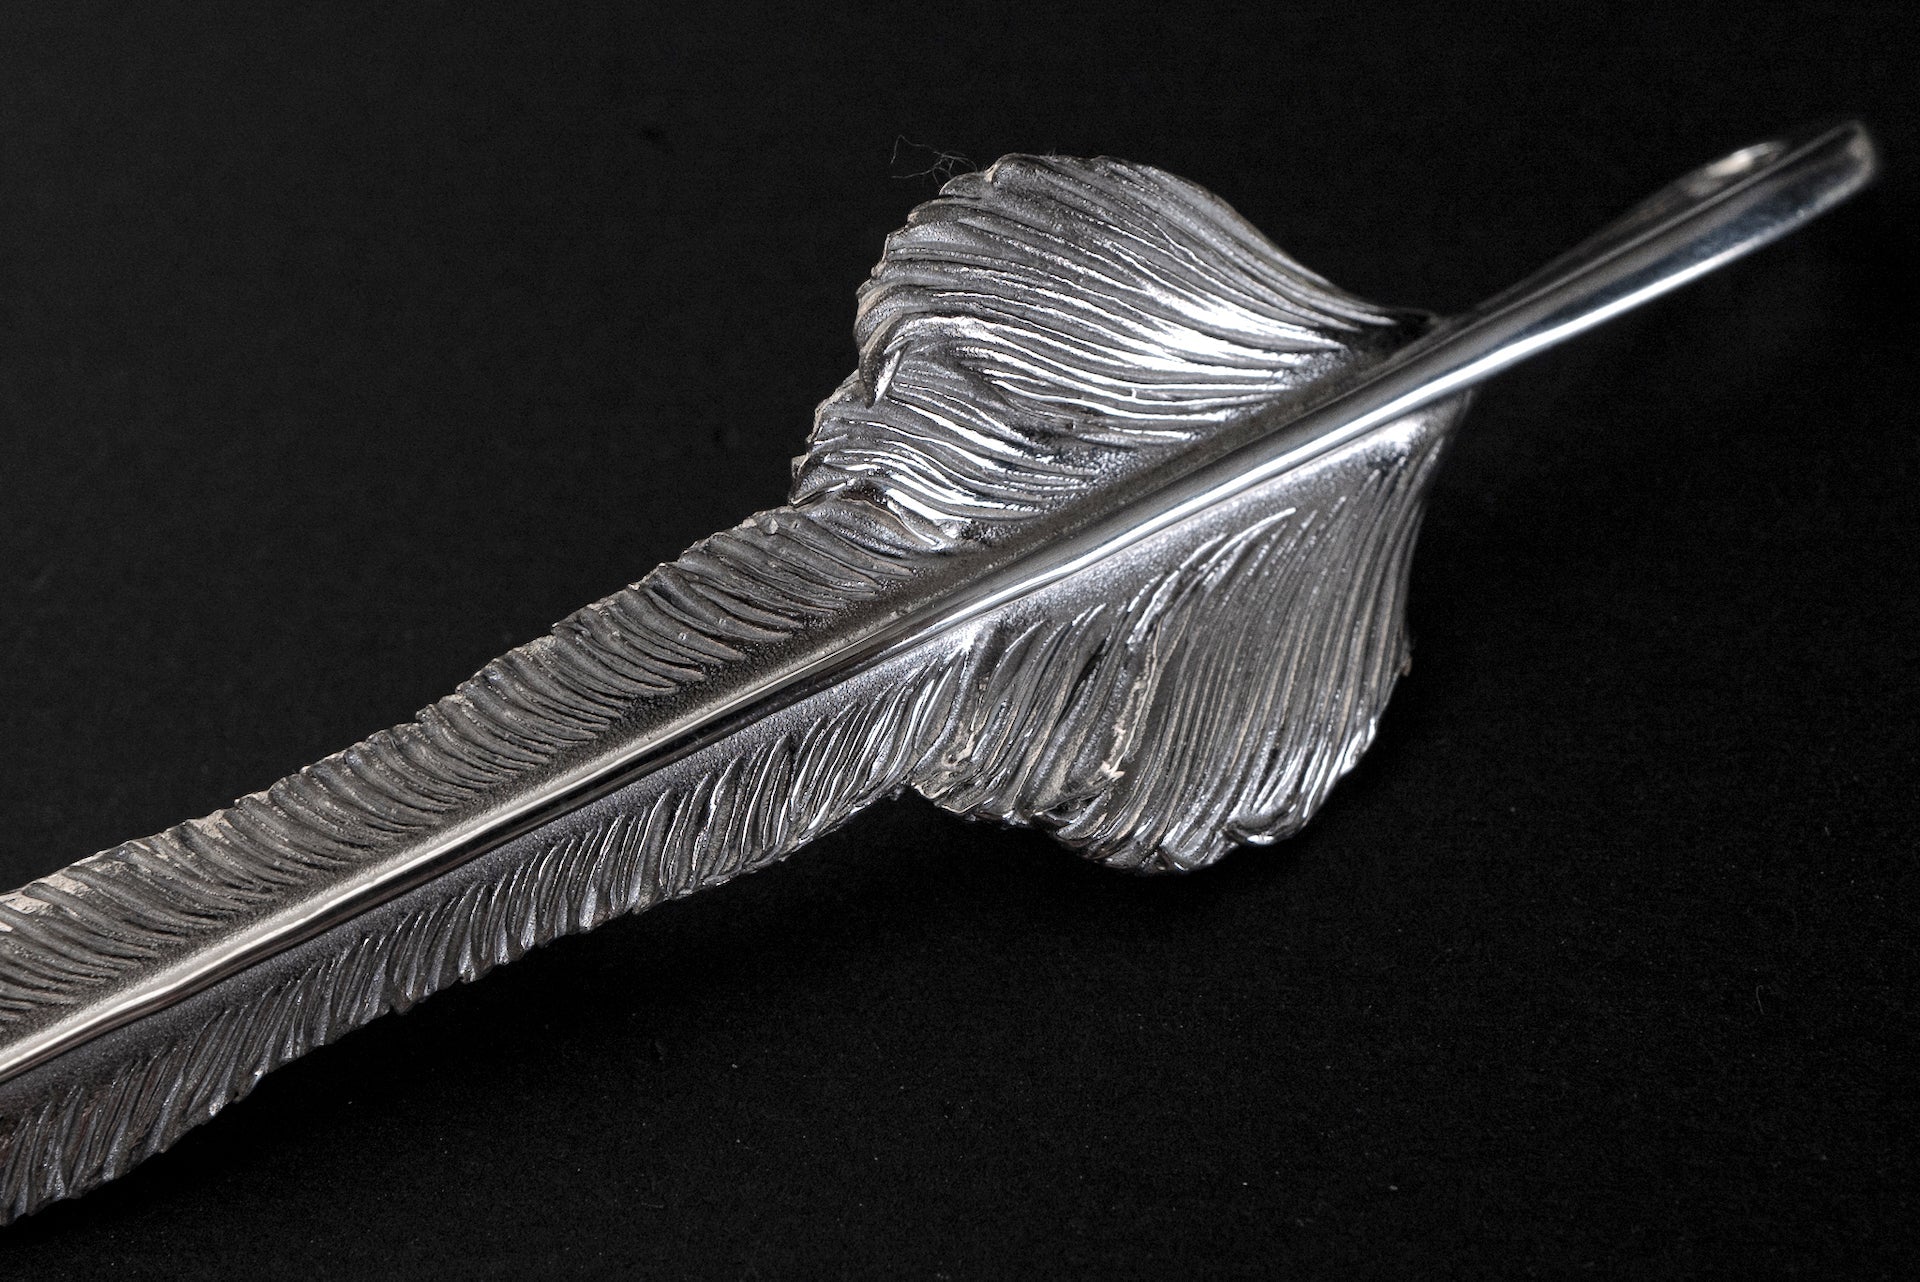 Legend Size Medium "Spiritual Feather" Silver Pendant (P-165-M)